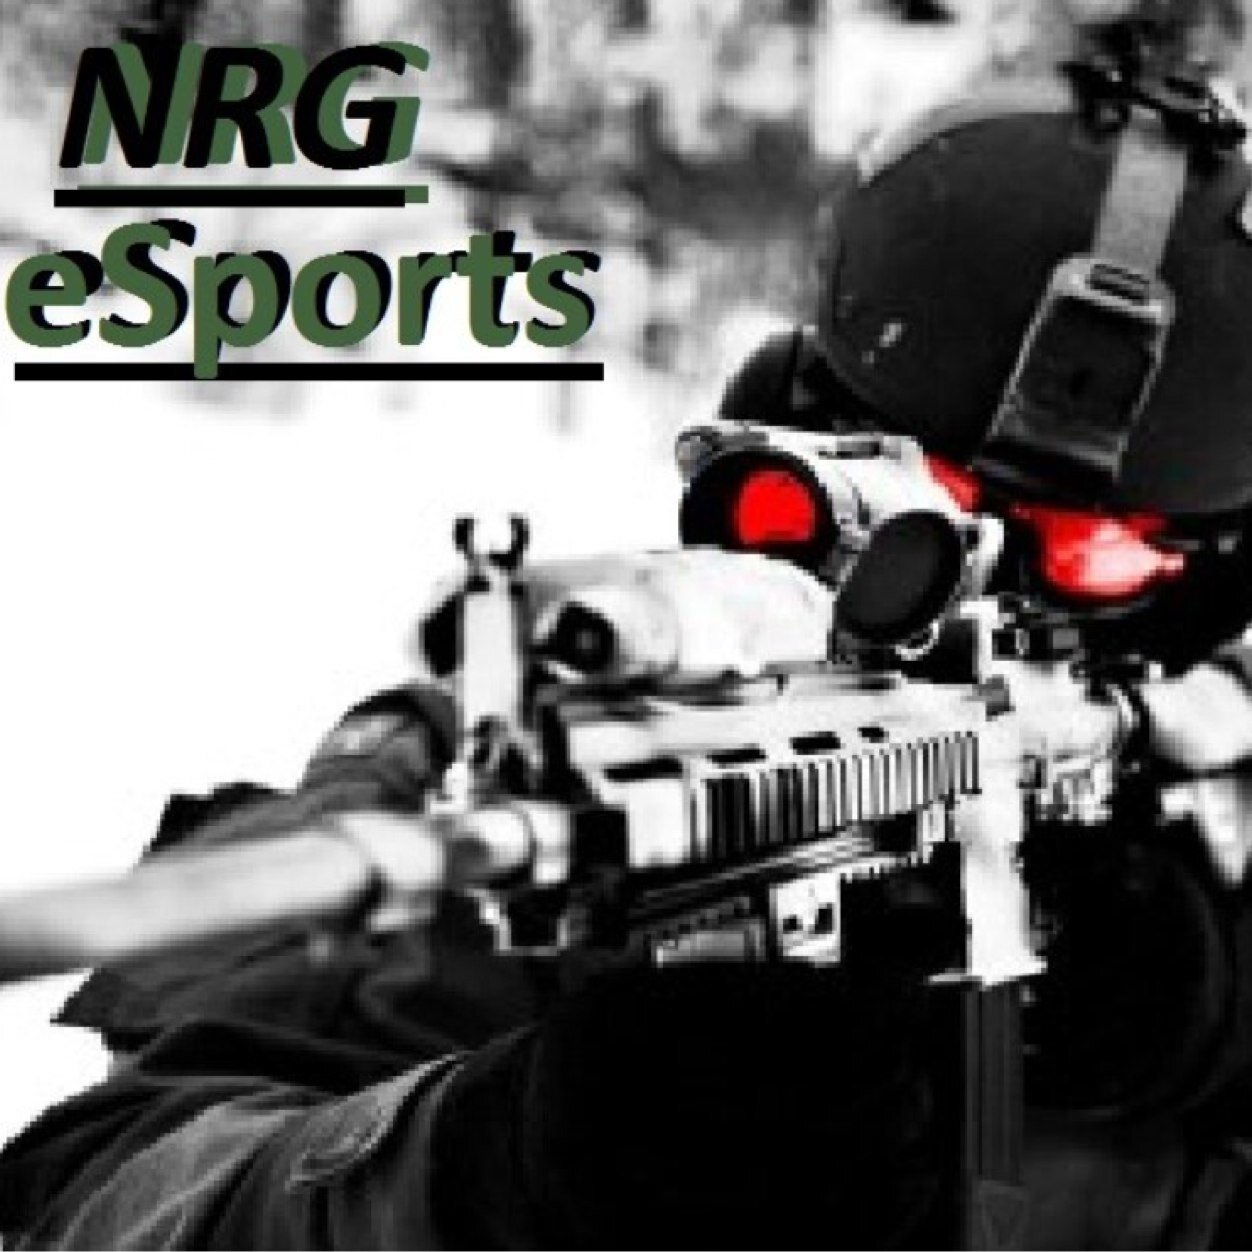 NRGeSports.CoD Team Looking To Go Big,#NRG,DreamsNeverDie, Roster: Freshyy,Suprxme,Acidity,Evoxy.